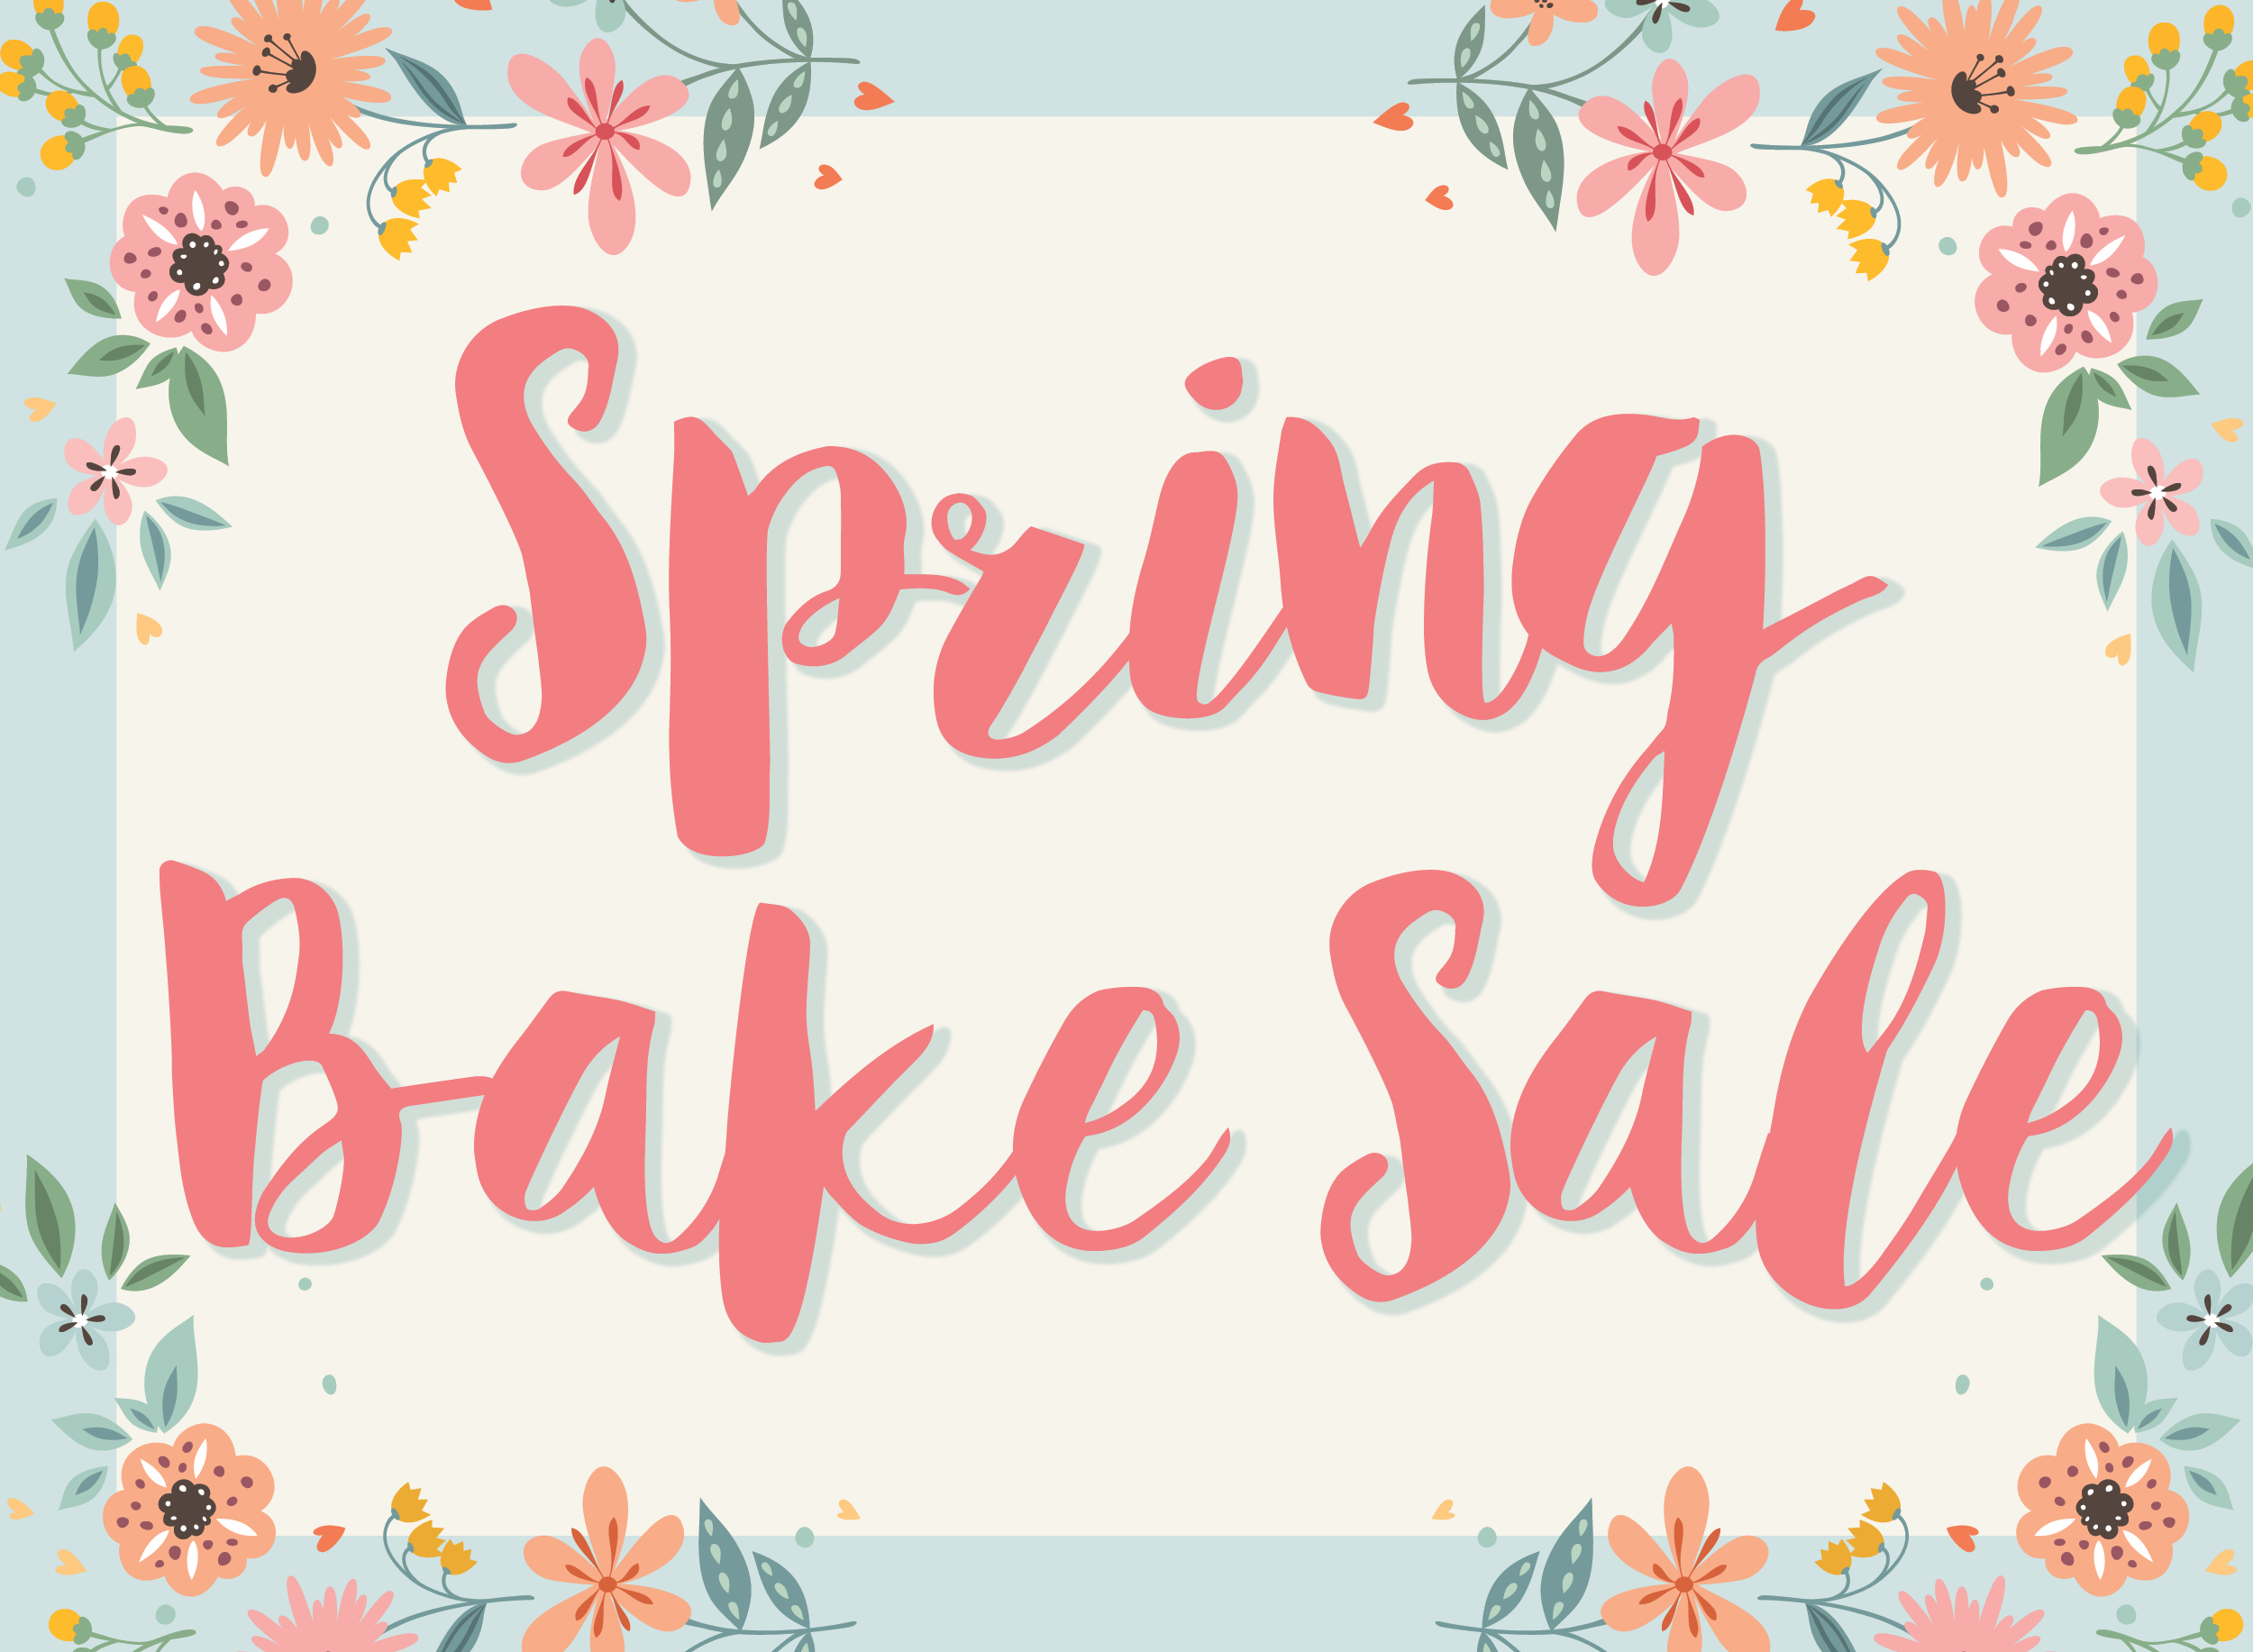 Spring Bake Sale graphic